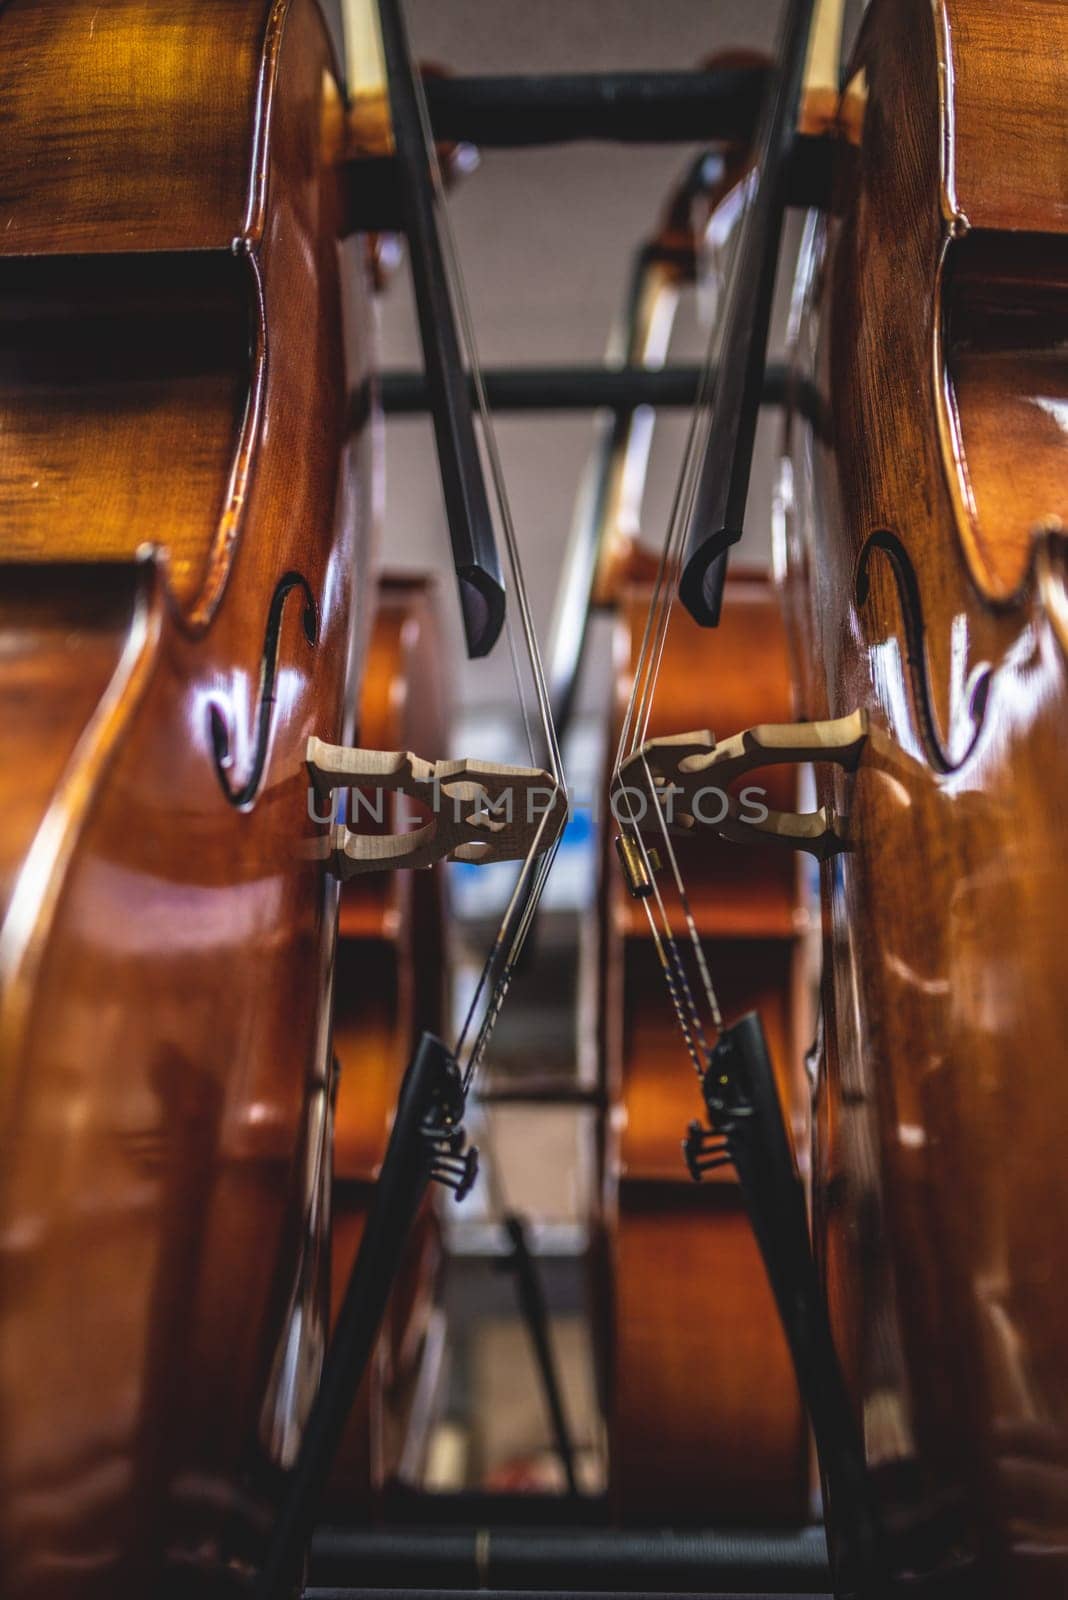 Wooden cellos leaning sideways